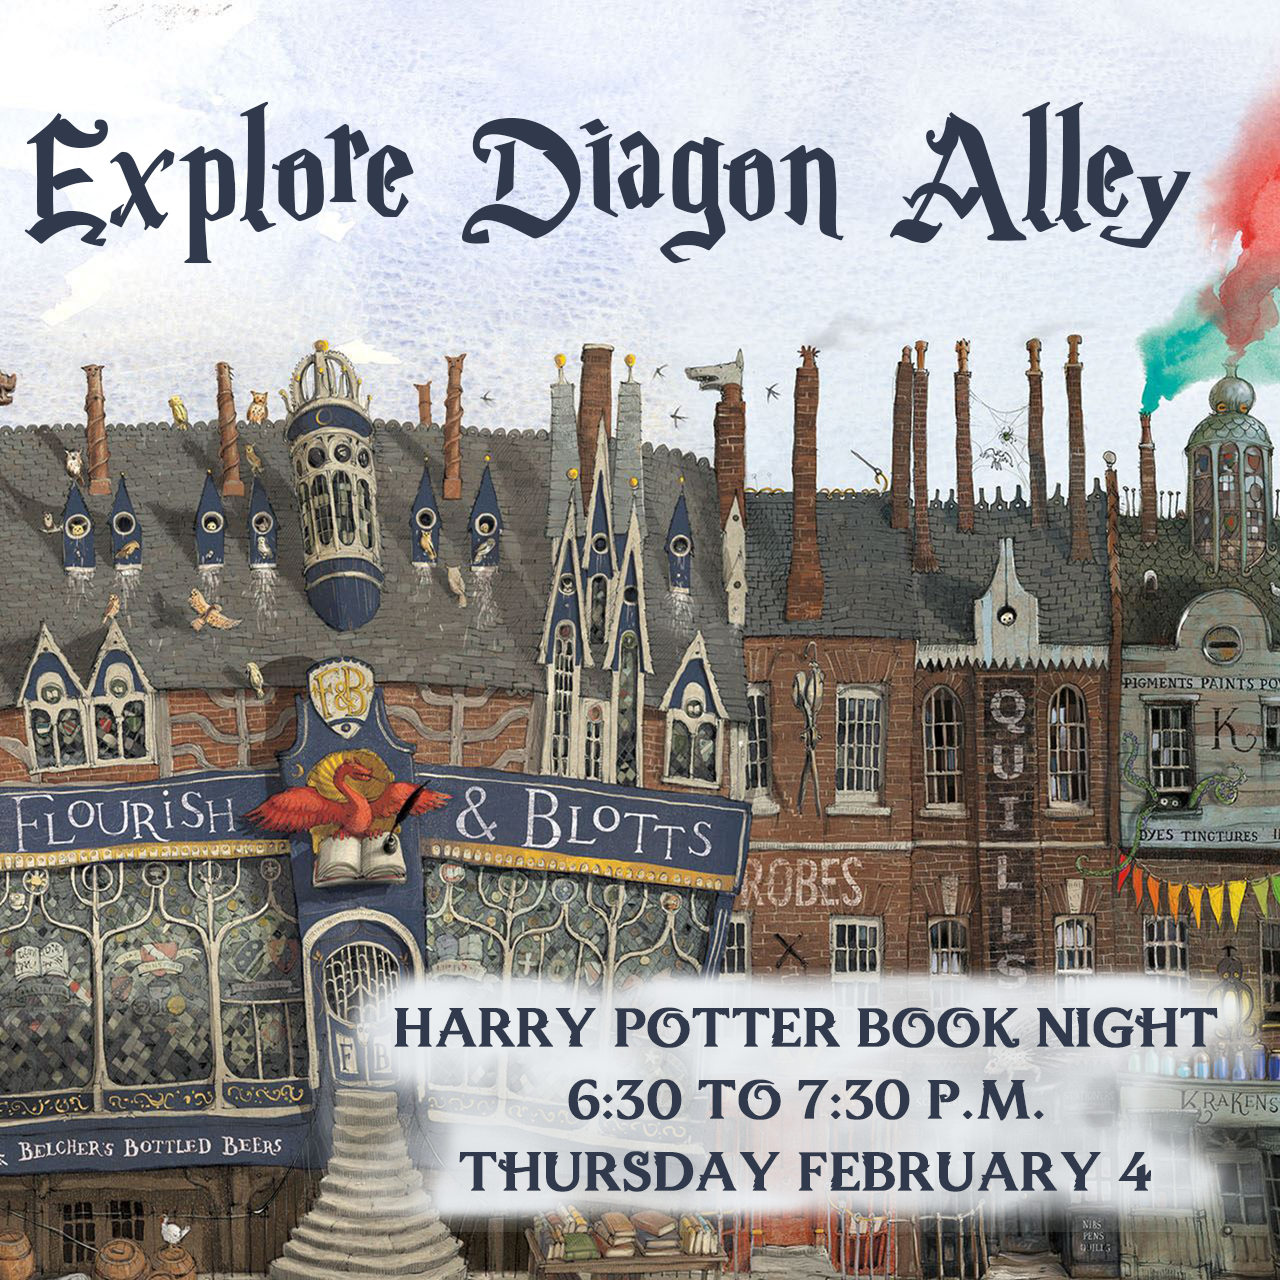 Explore Diagon Alley: Harry Potter Book Night